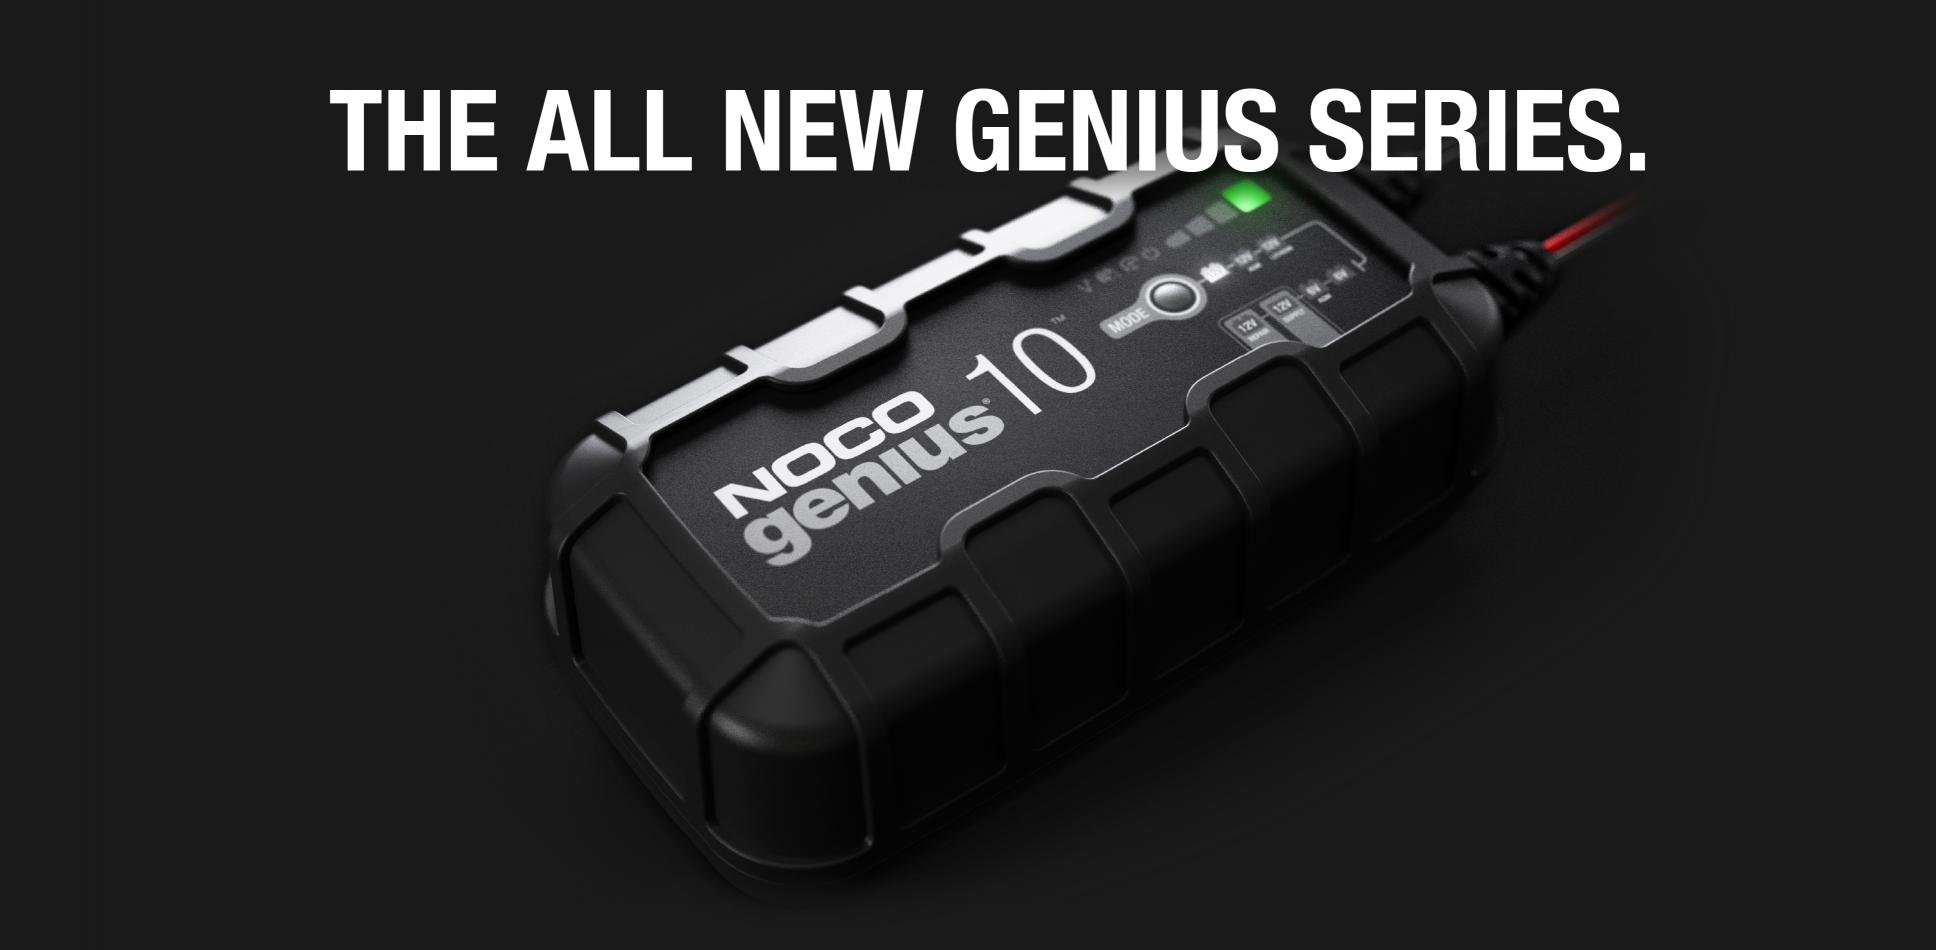 GENIUS10 6V/12V 10-Amp Smart Battery Charger - Noco Genius